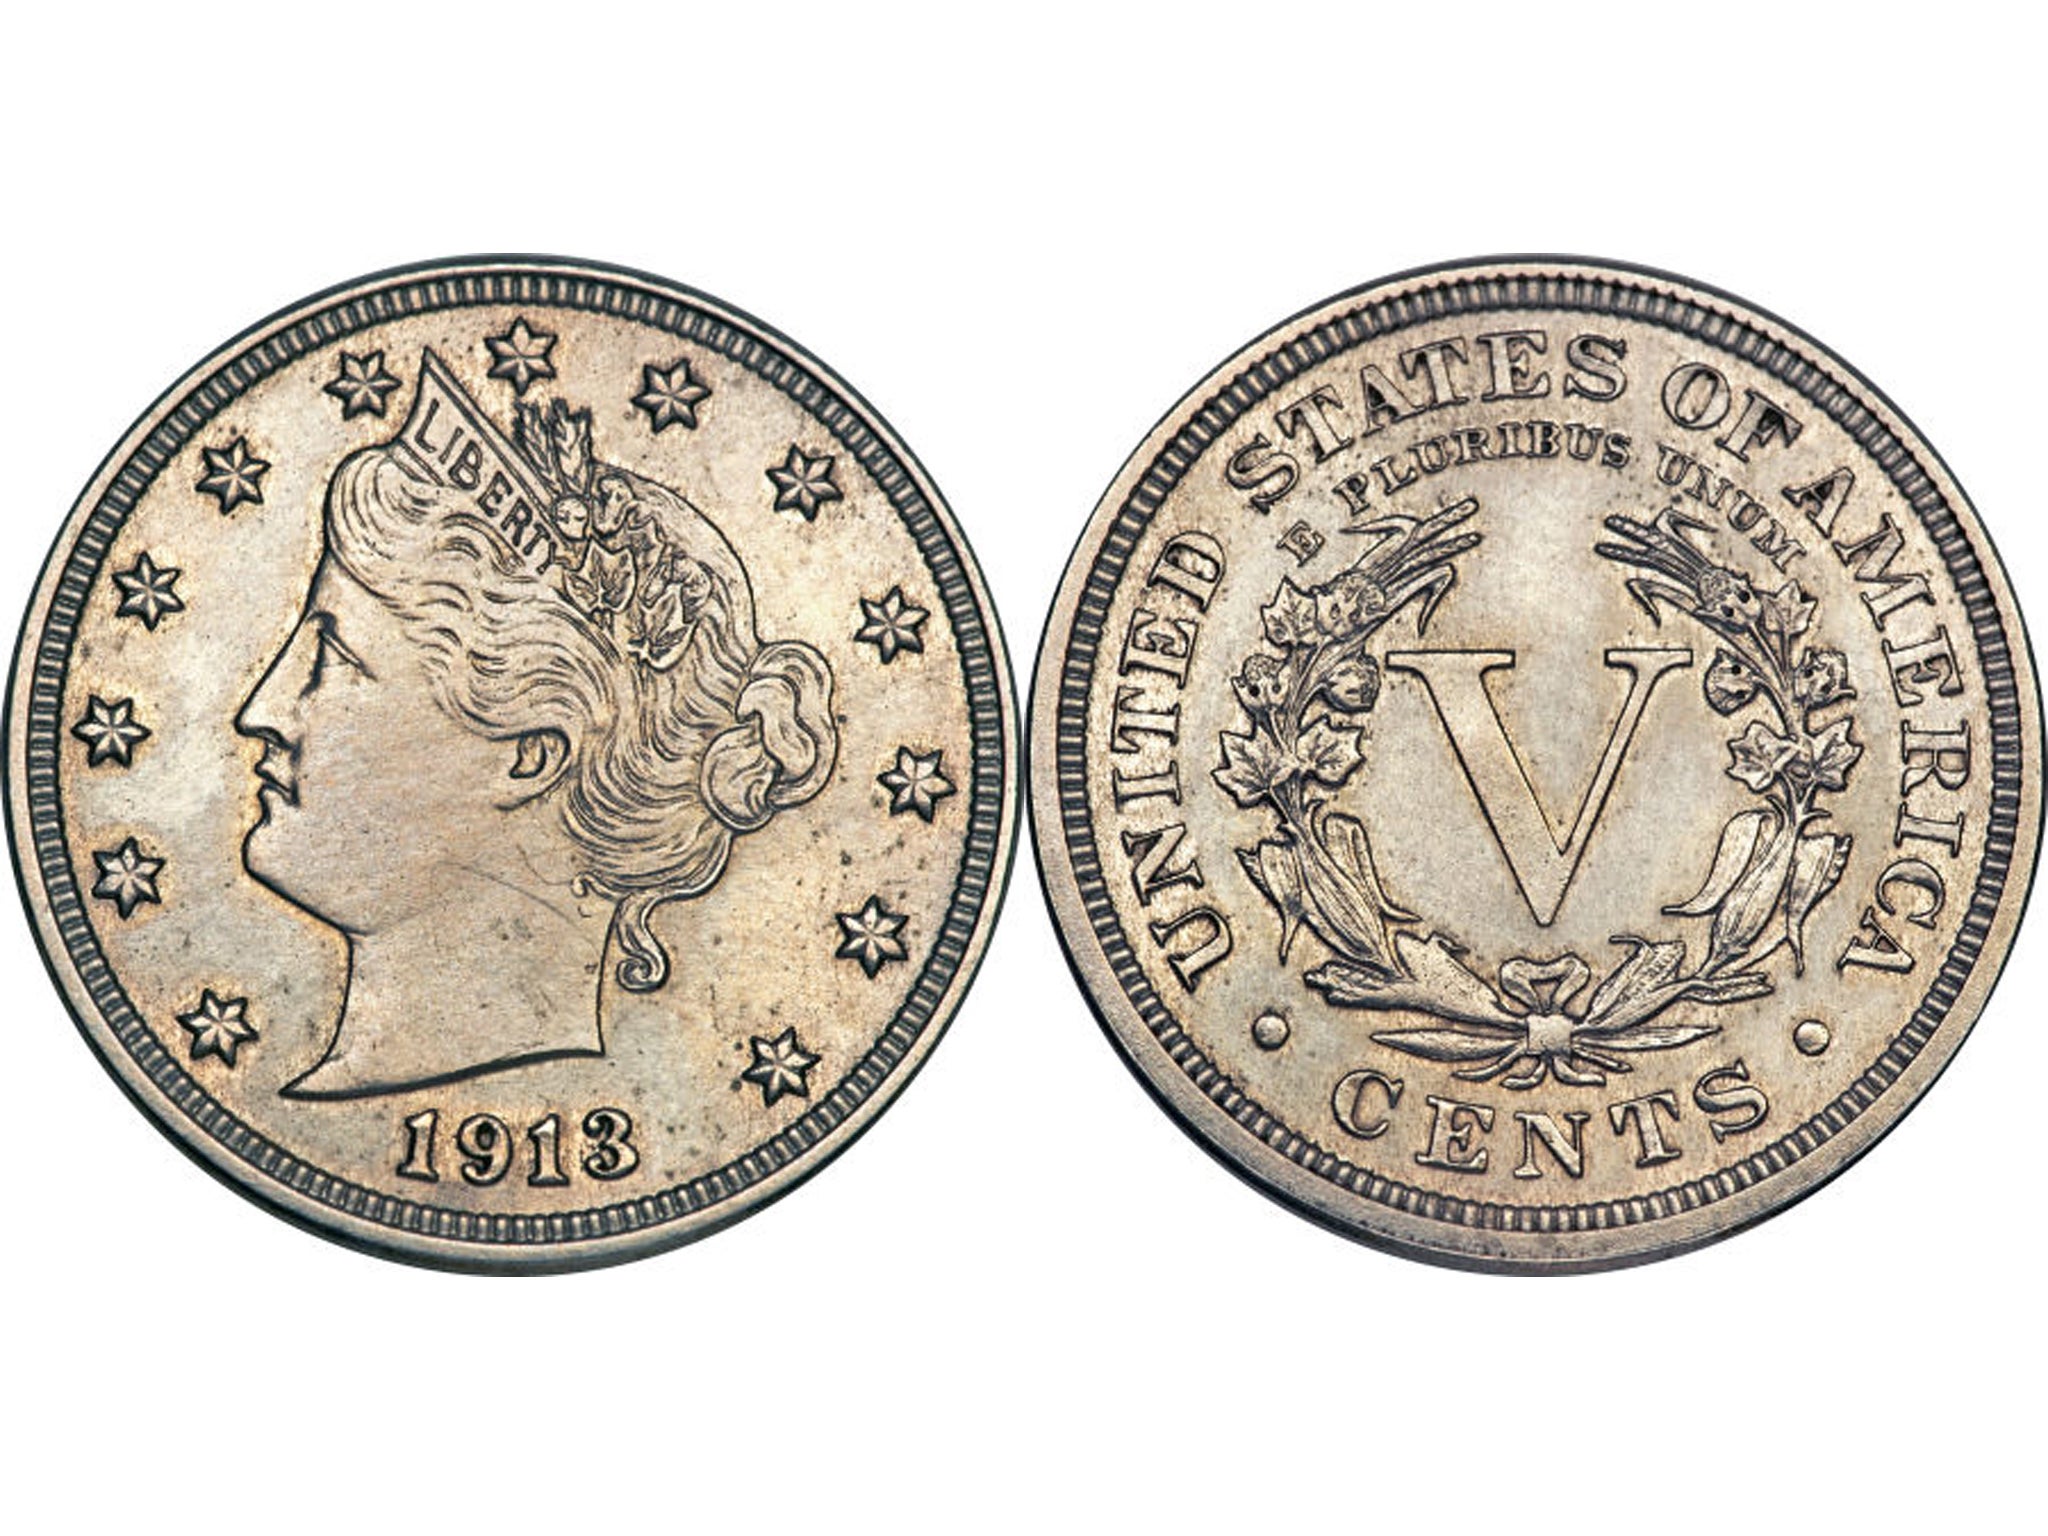 The Walton specimen of the 1913 Liberty Head nickels